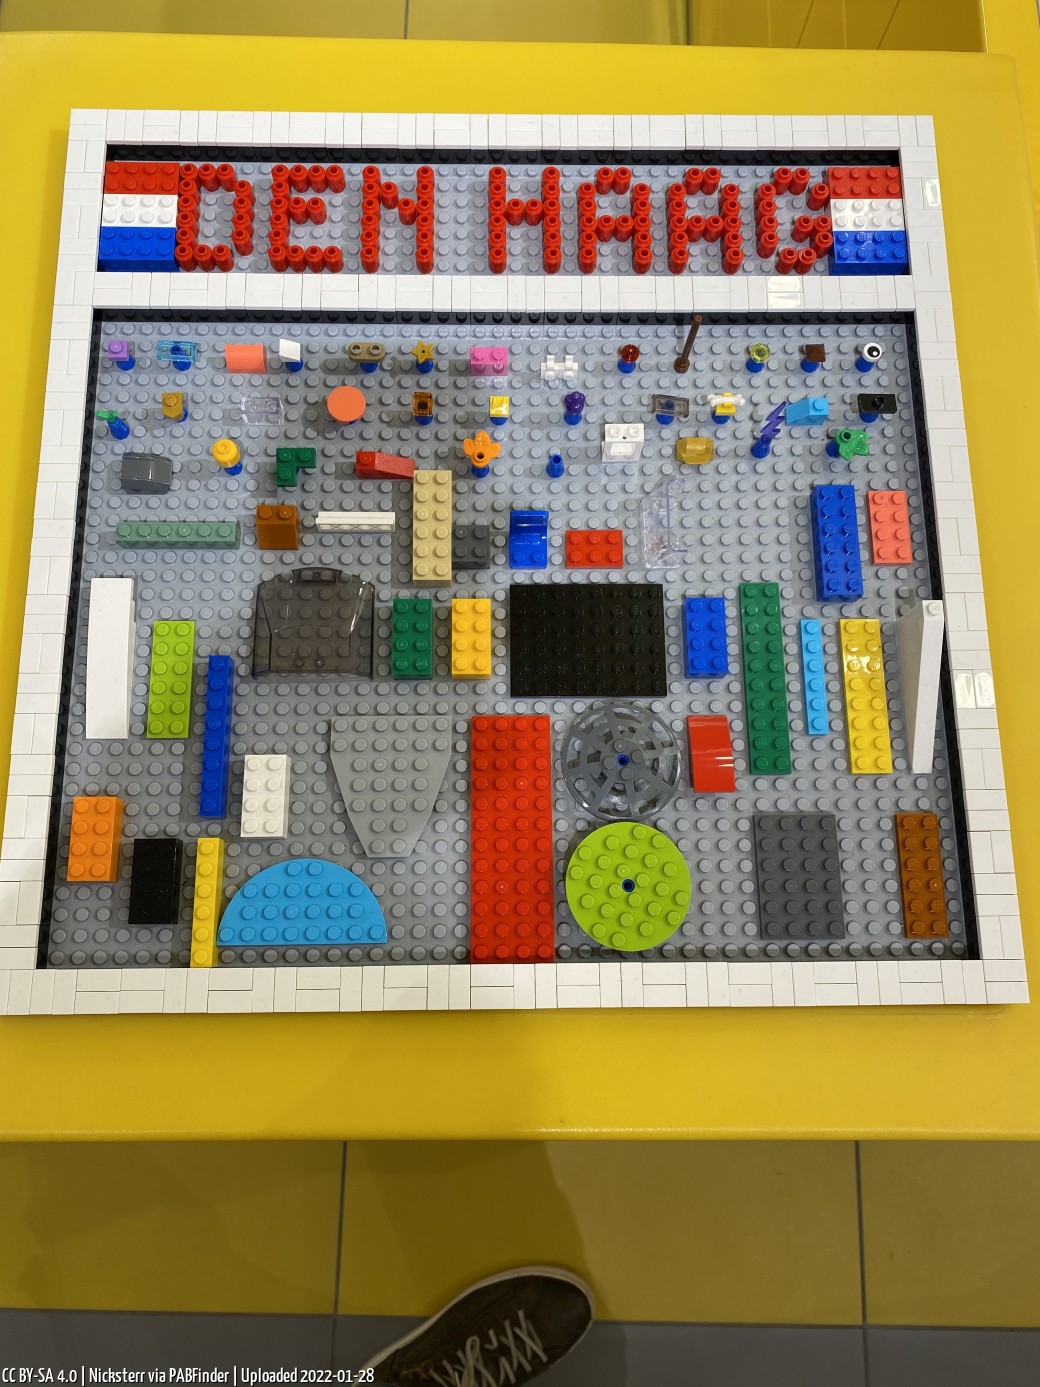 Pick a Brick Mall of the Netherlands (Nicksterr, 1/28/22, 11:59:19 AM)